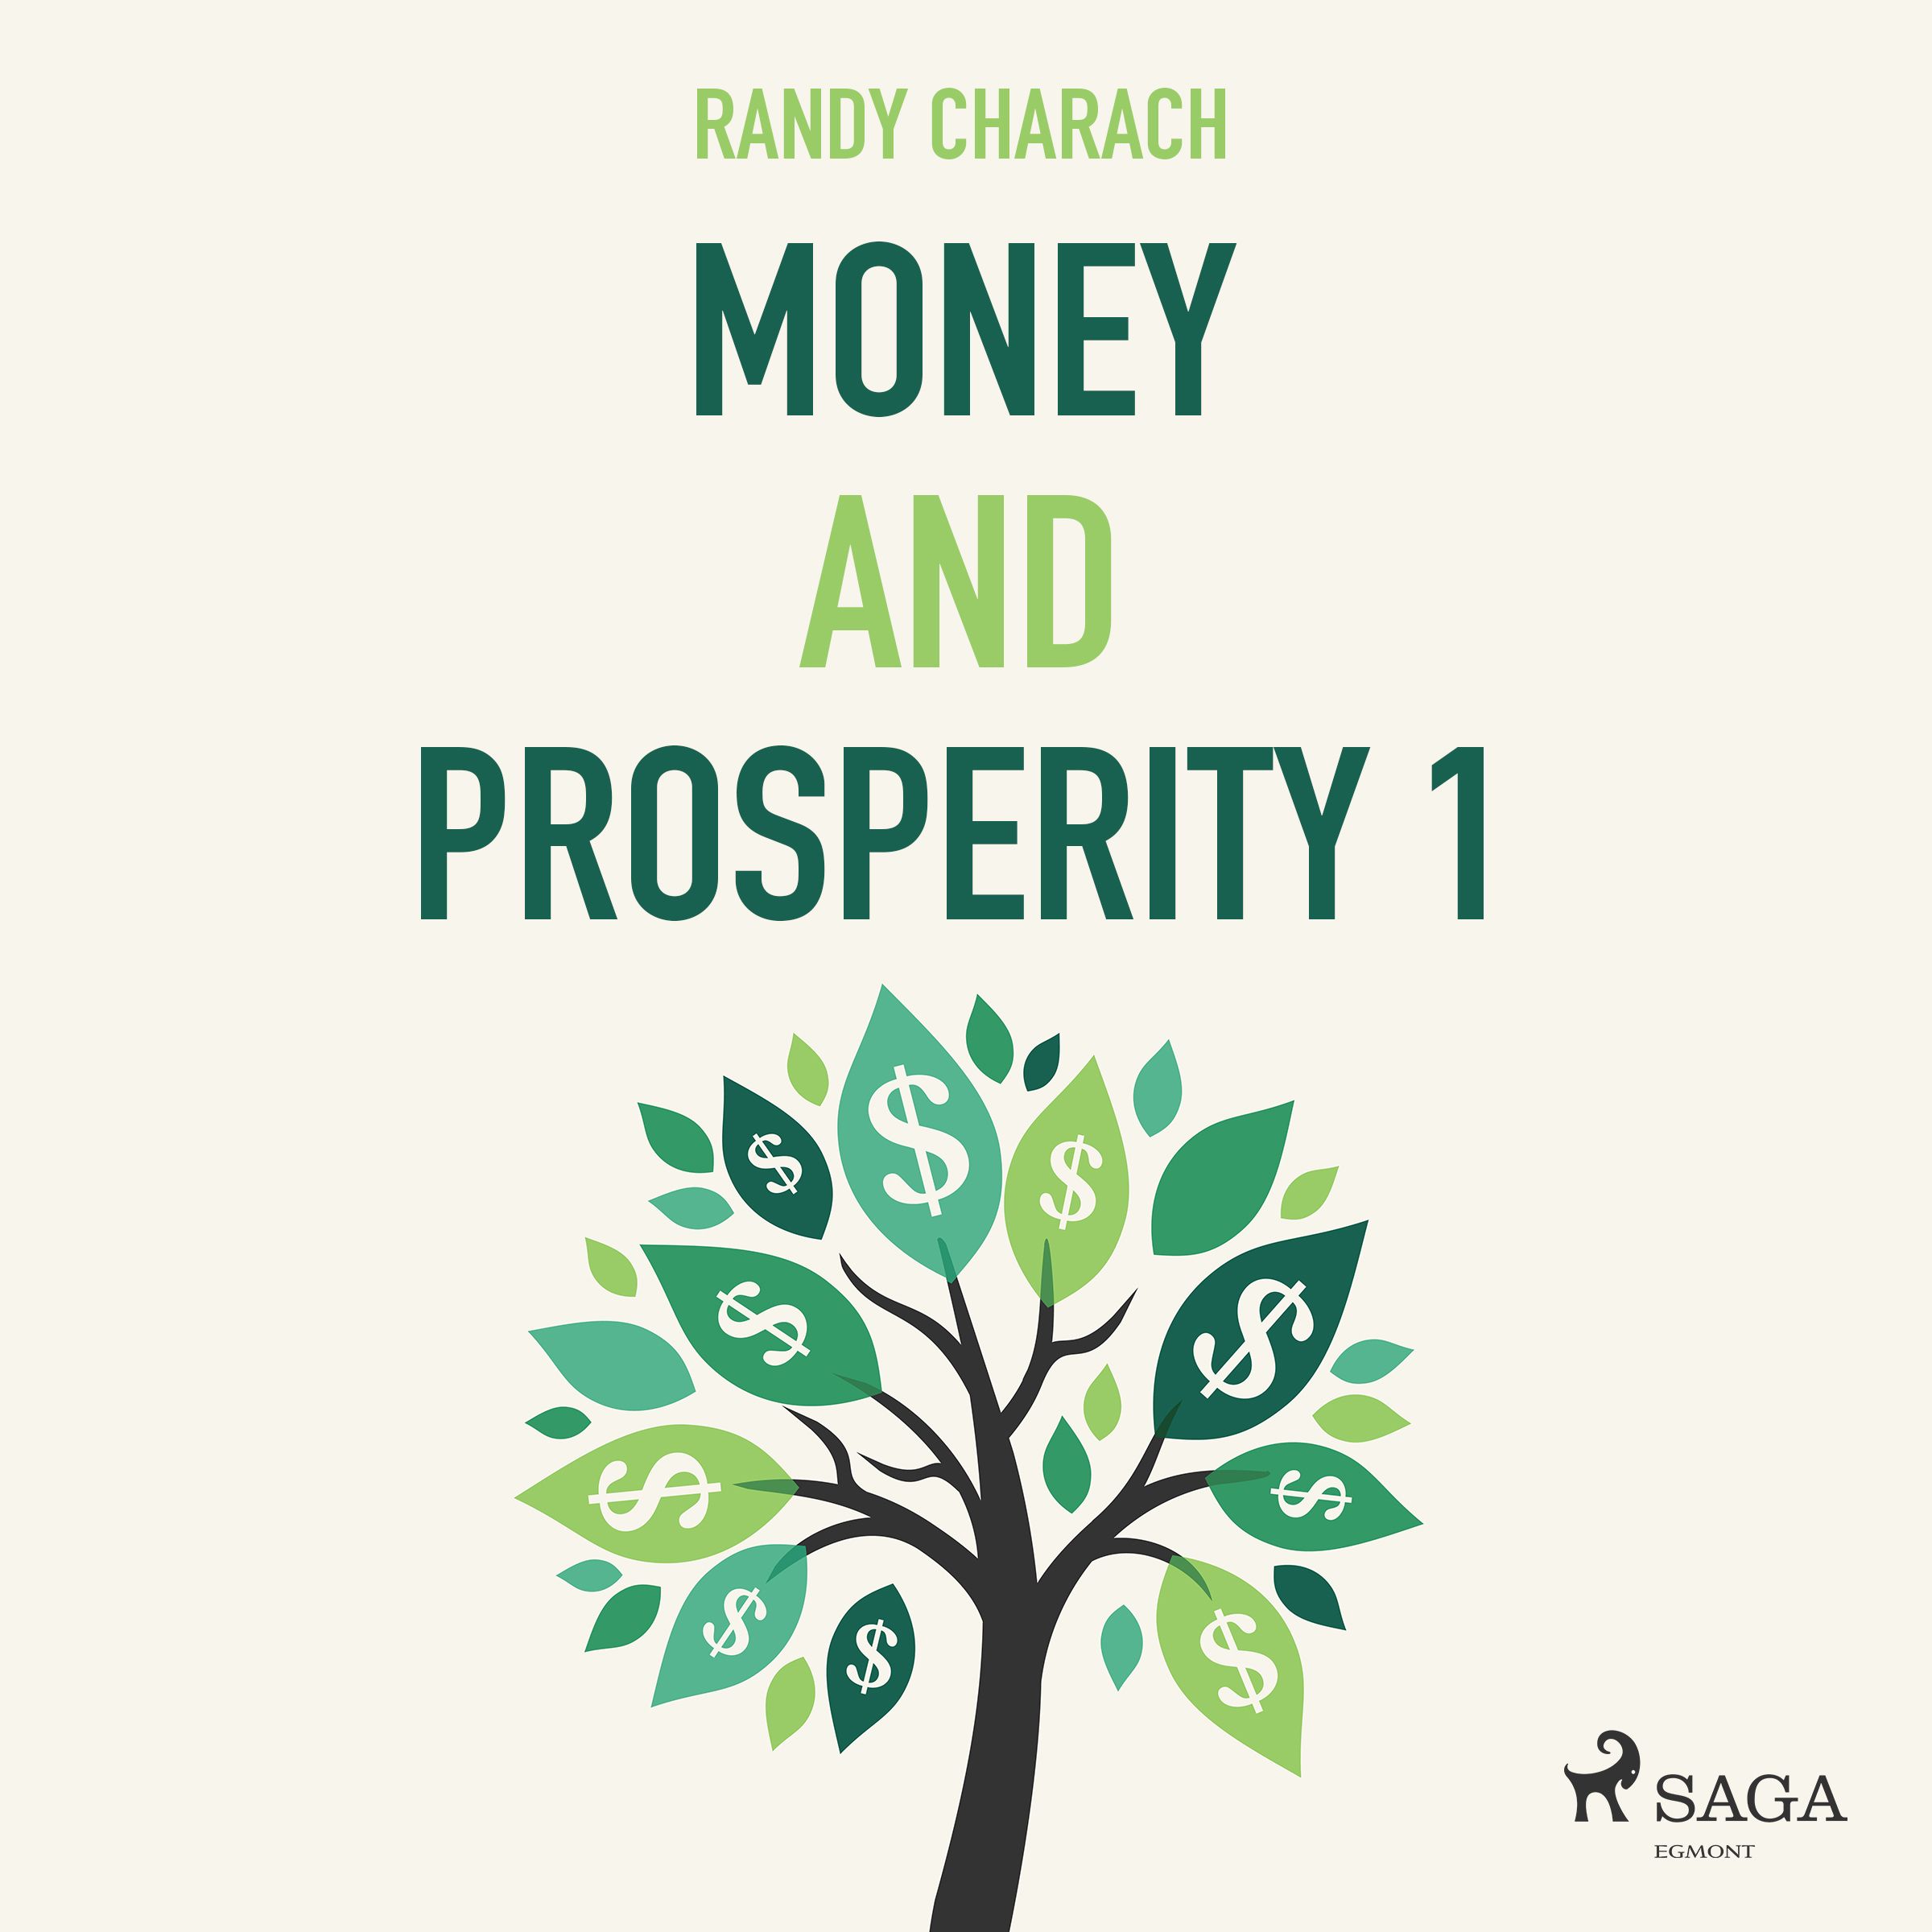 Money and Prosperity 1, ljudbok av Randy Charach